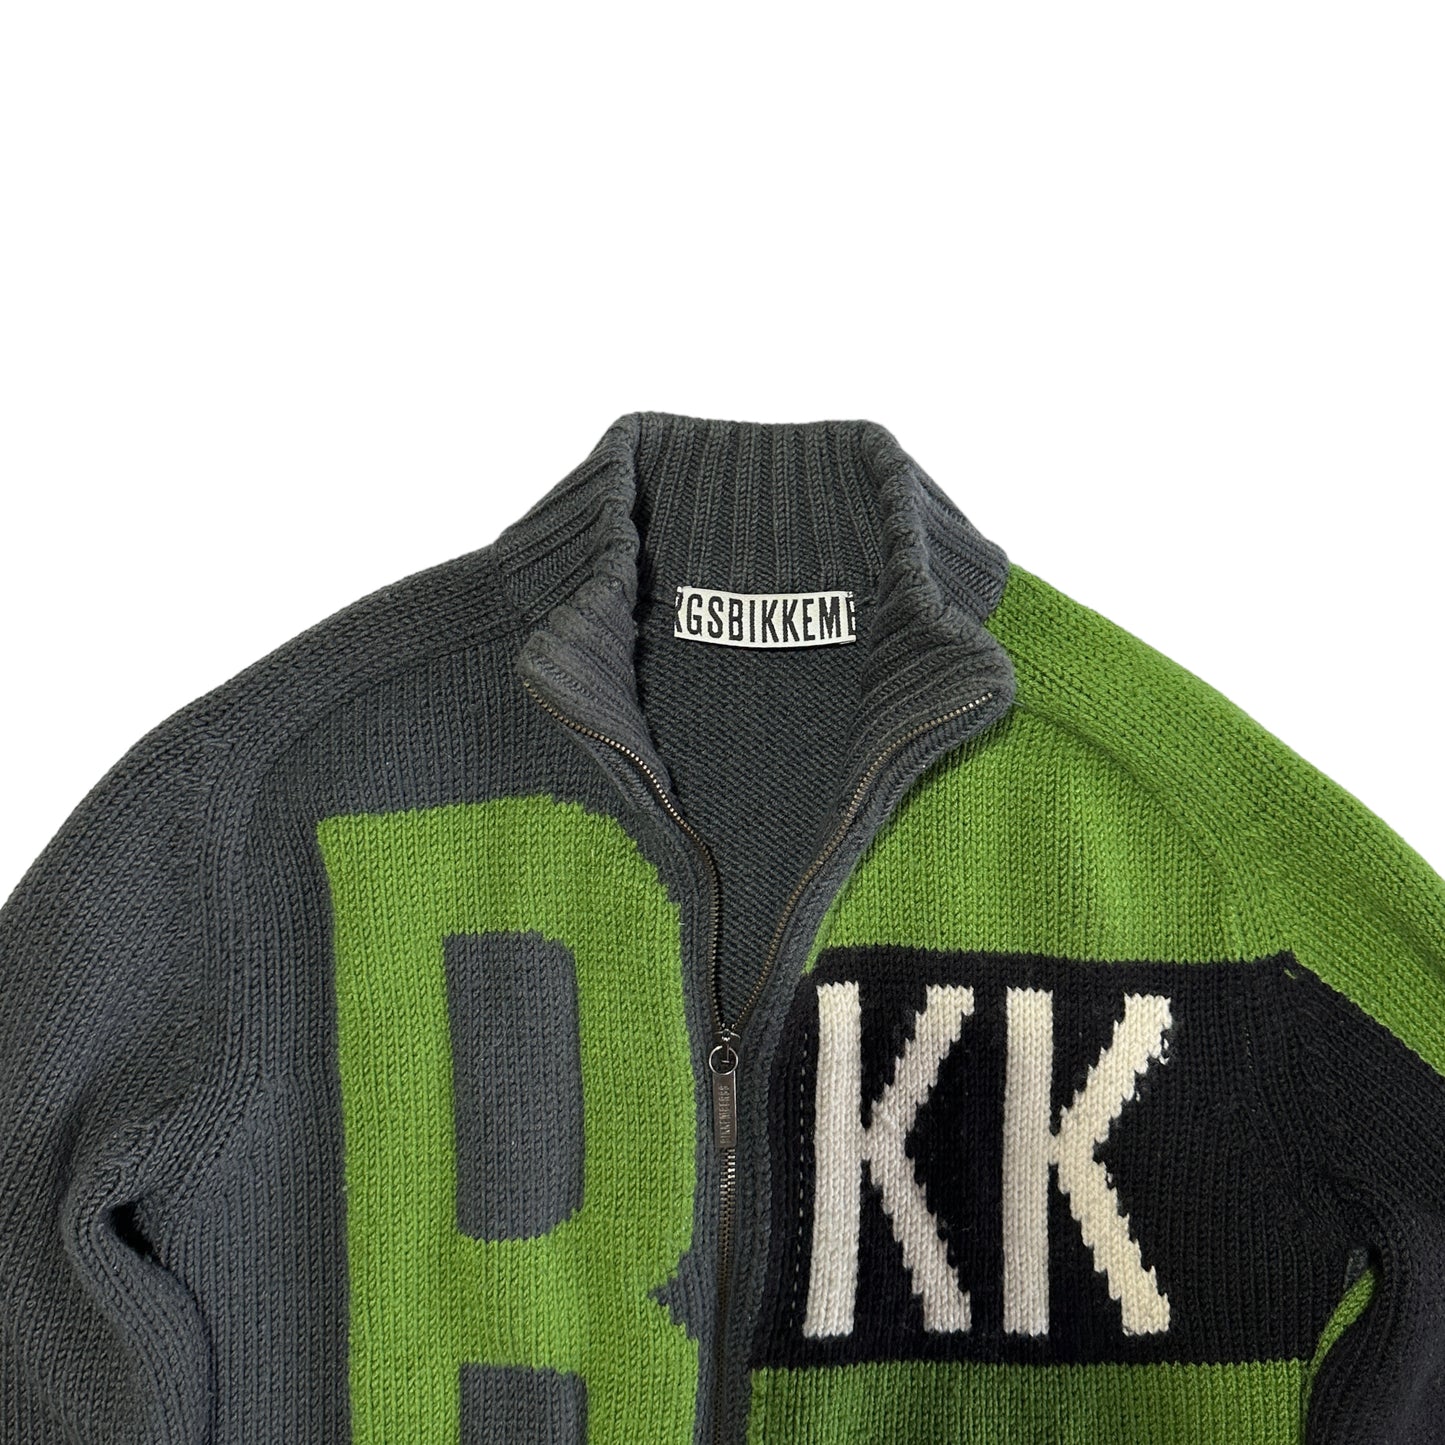 00's Dirk Bikkembergs Wool Jacket (M-L)